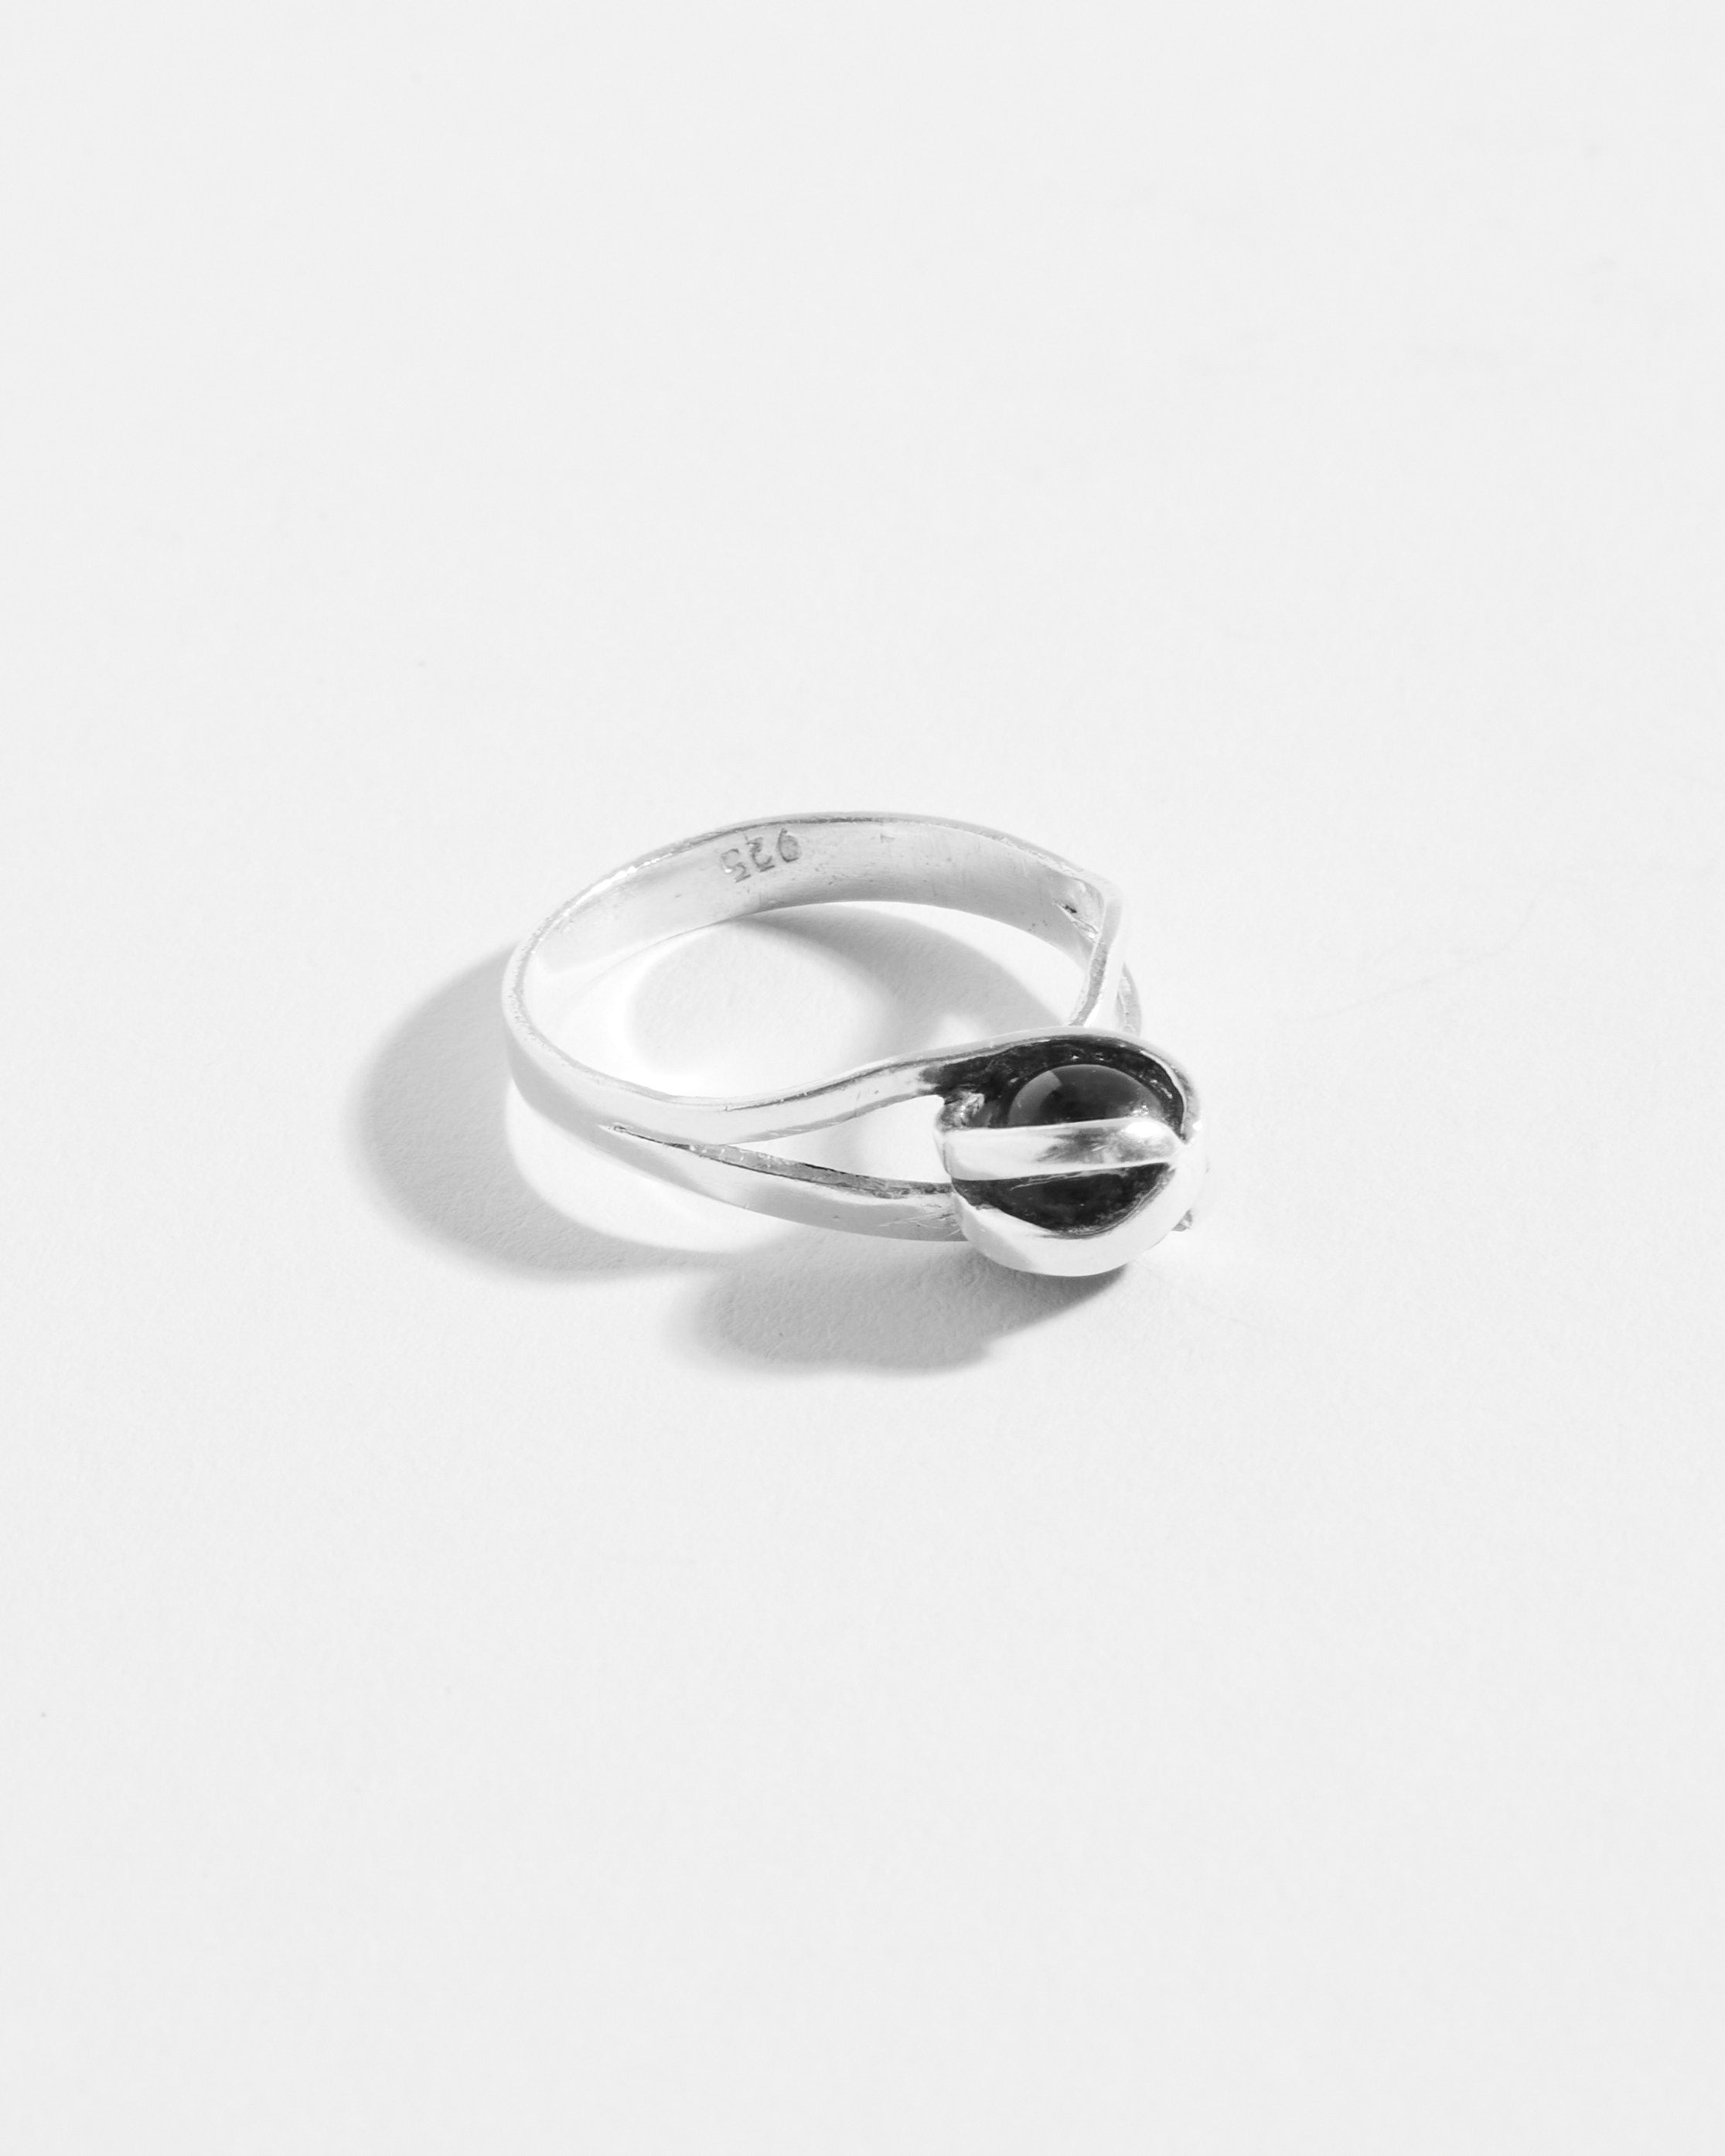 Elegant Garnet Ring